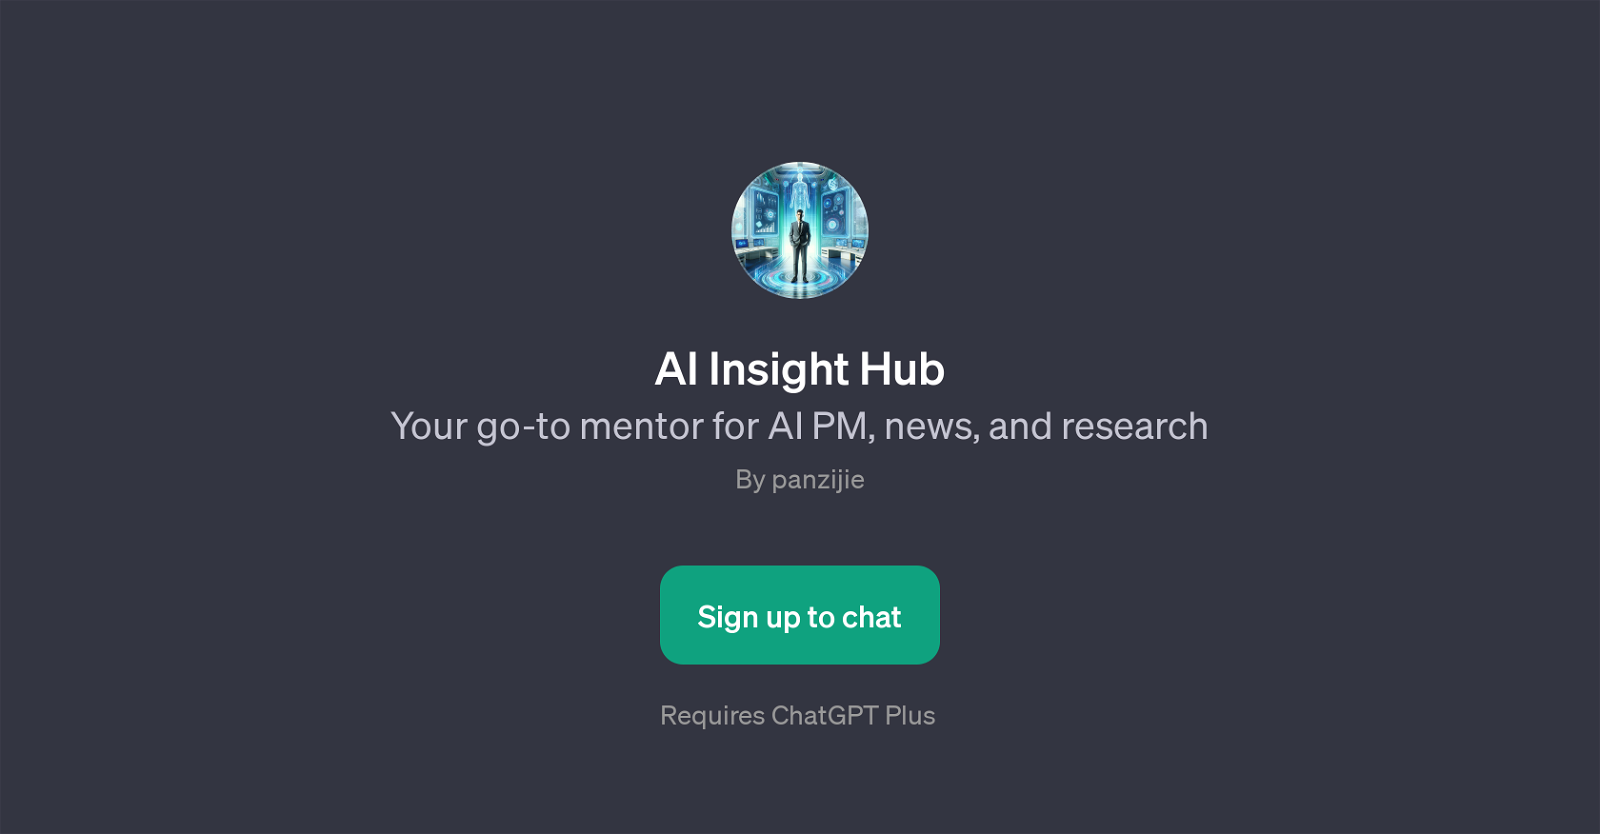 AI Insight Hub website